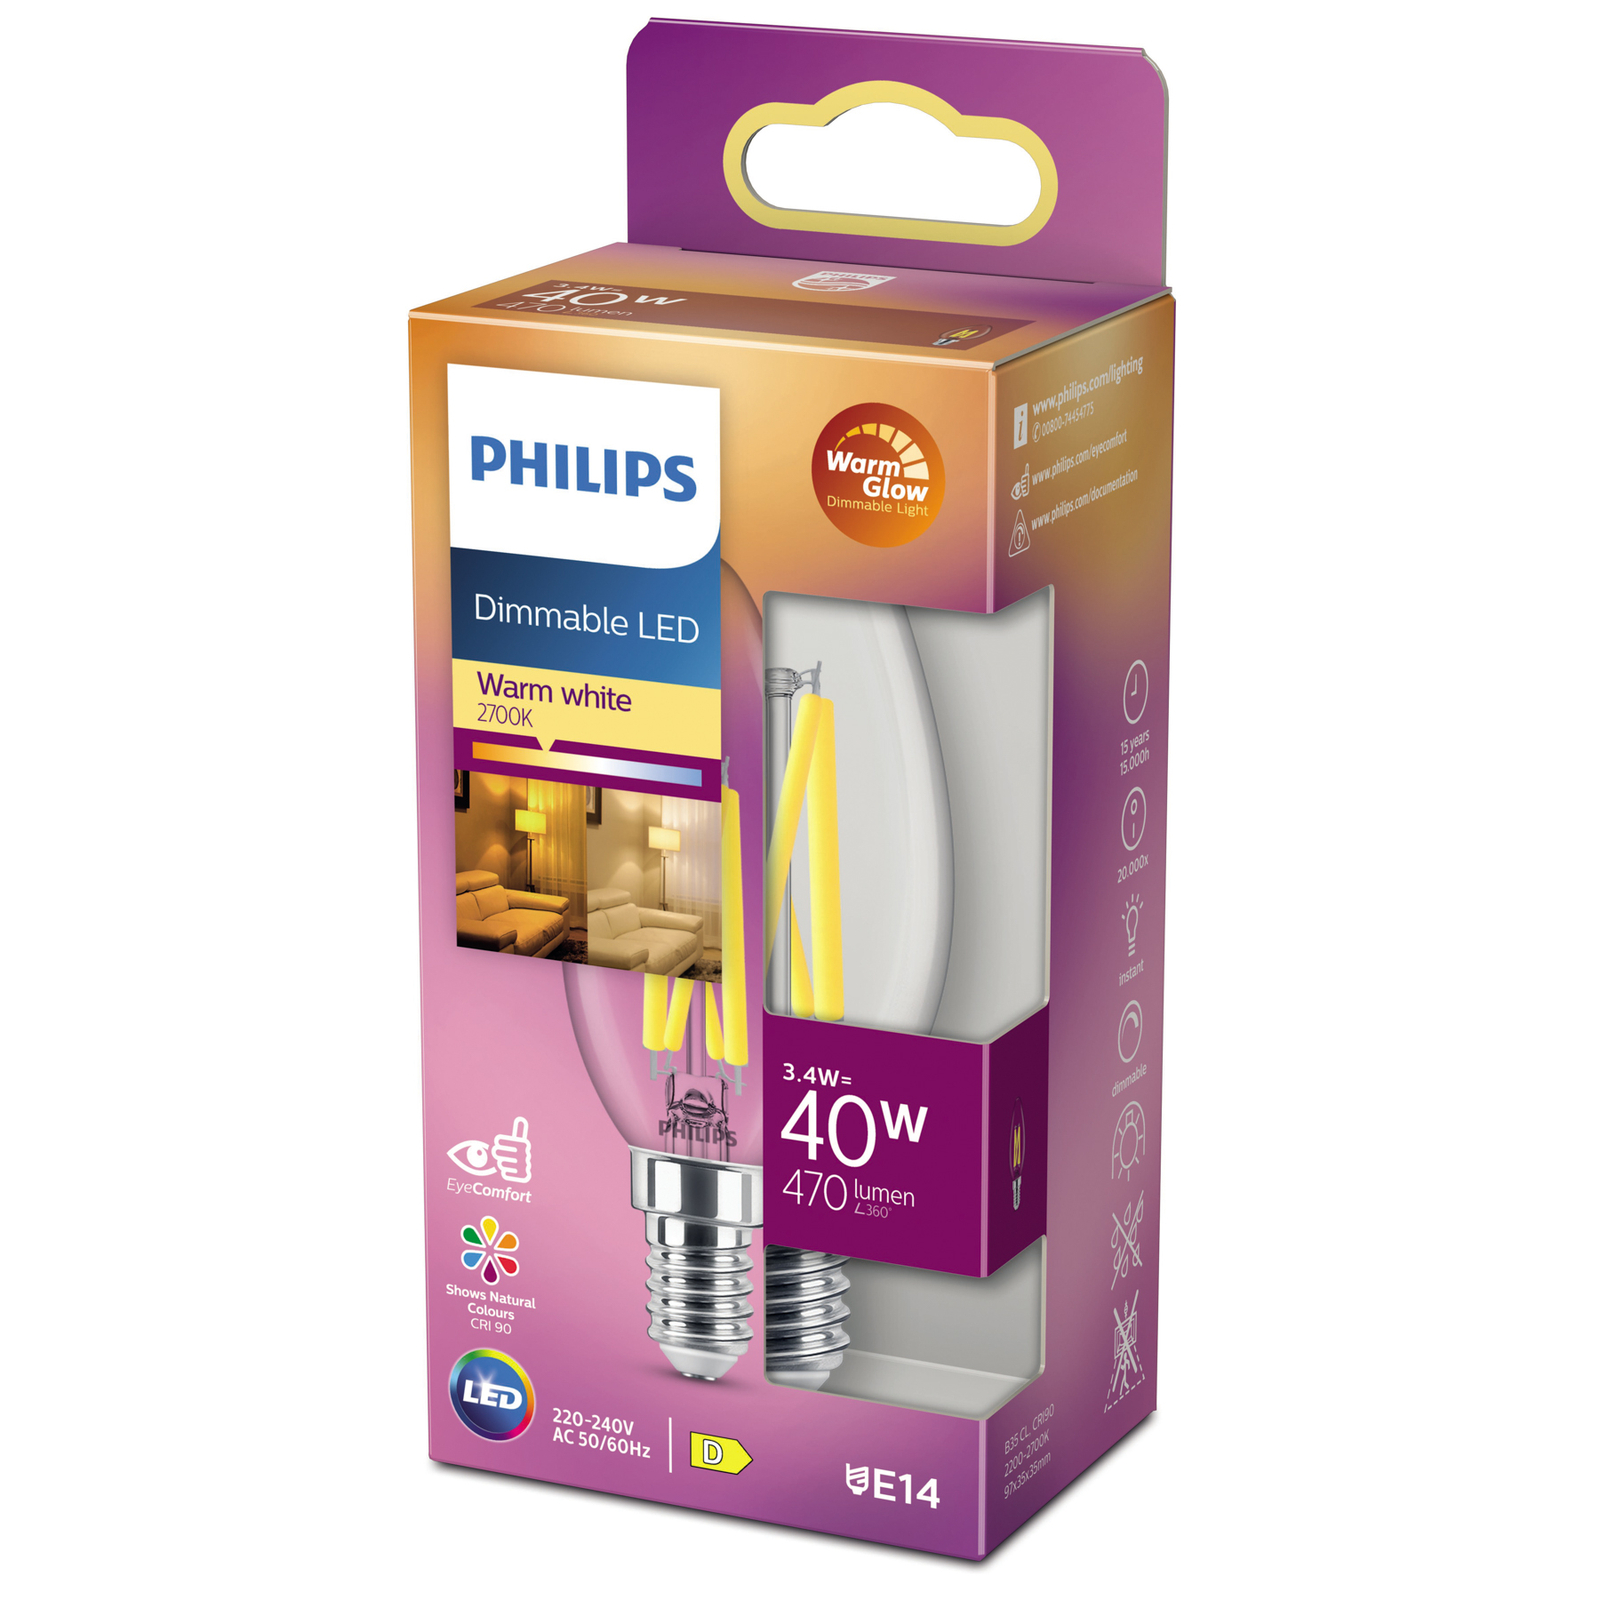 Philips LED bulb, E14 B35, 3.4 W, 2,700 K, WarmGlow